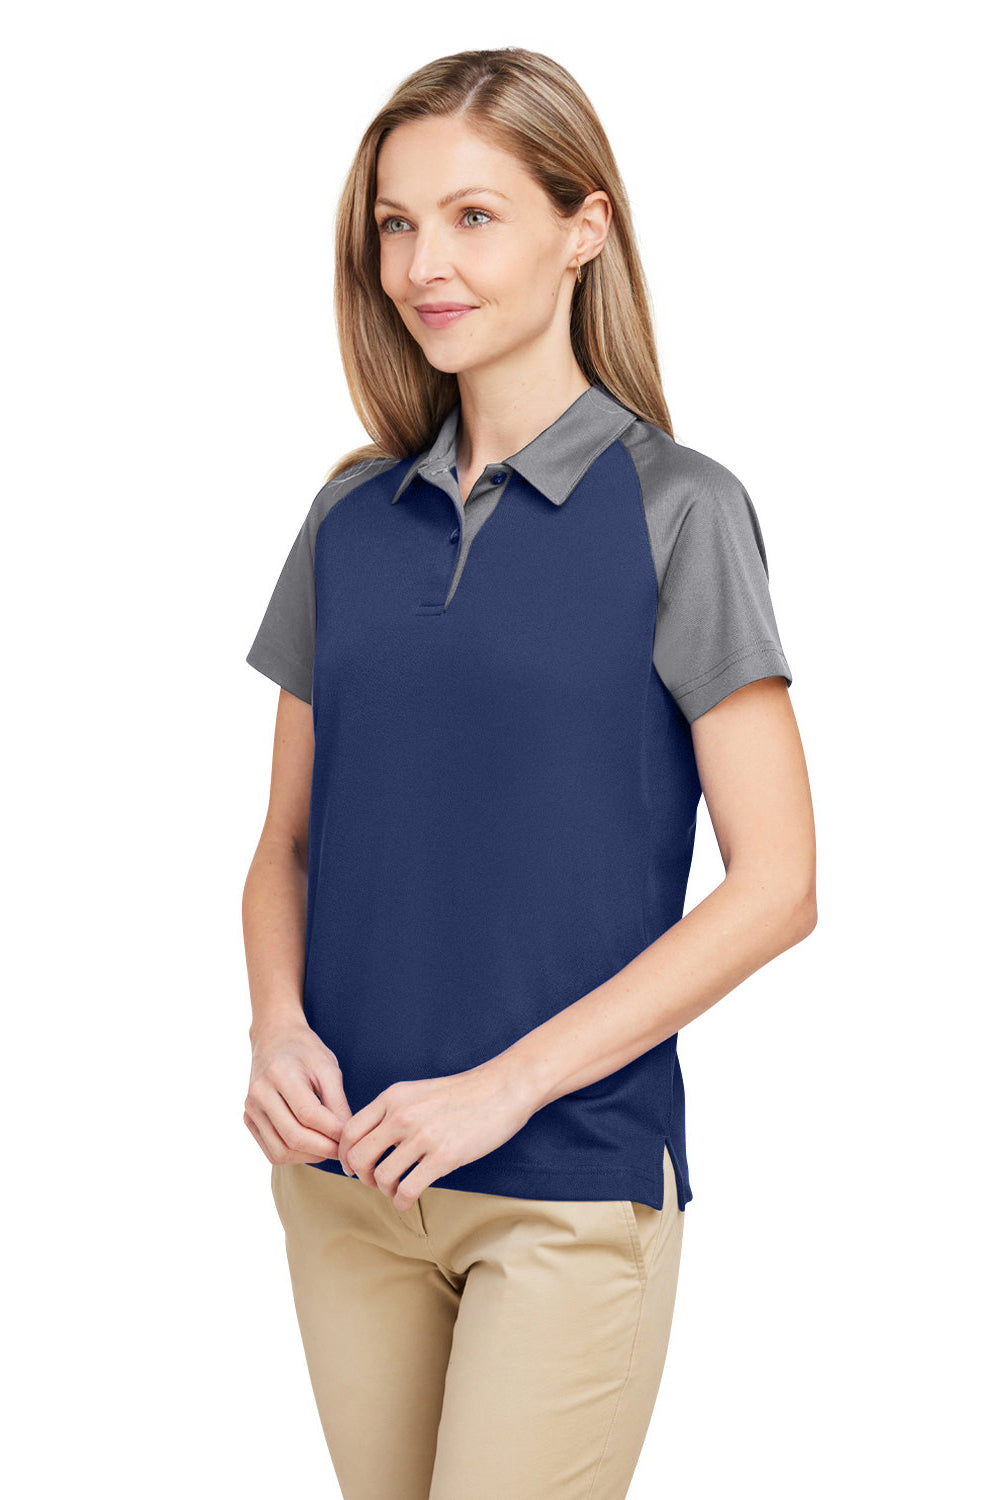 Team 365 TT21CW Womens Command Colorblock Moisture Wicking Short Sleeve Polo Shirt Dark Navy Blue/Graphite Grey 3Q